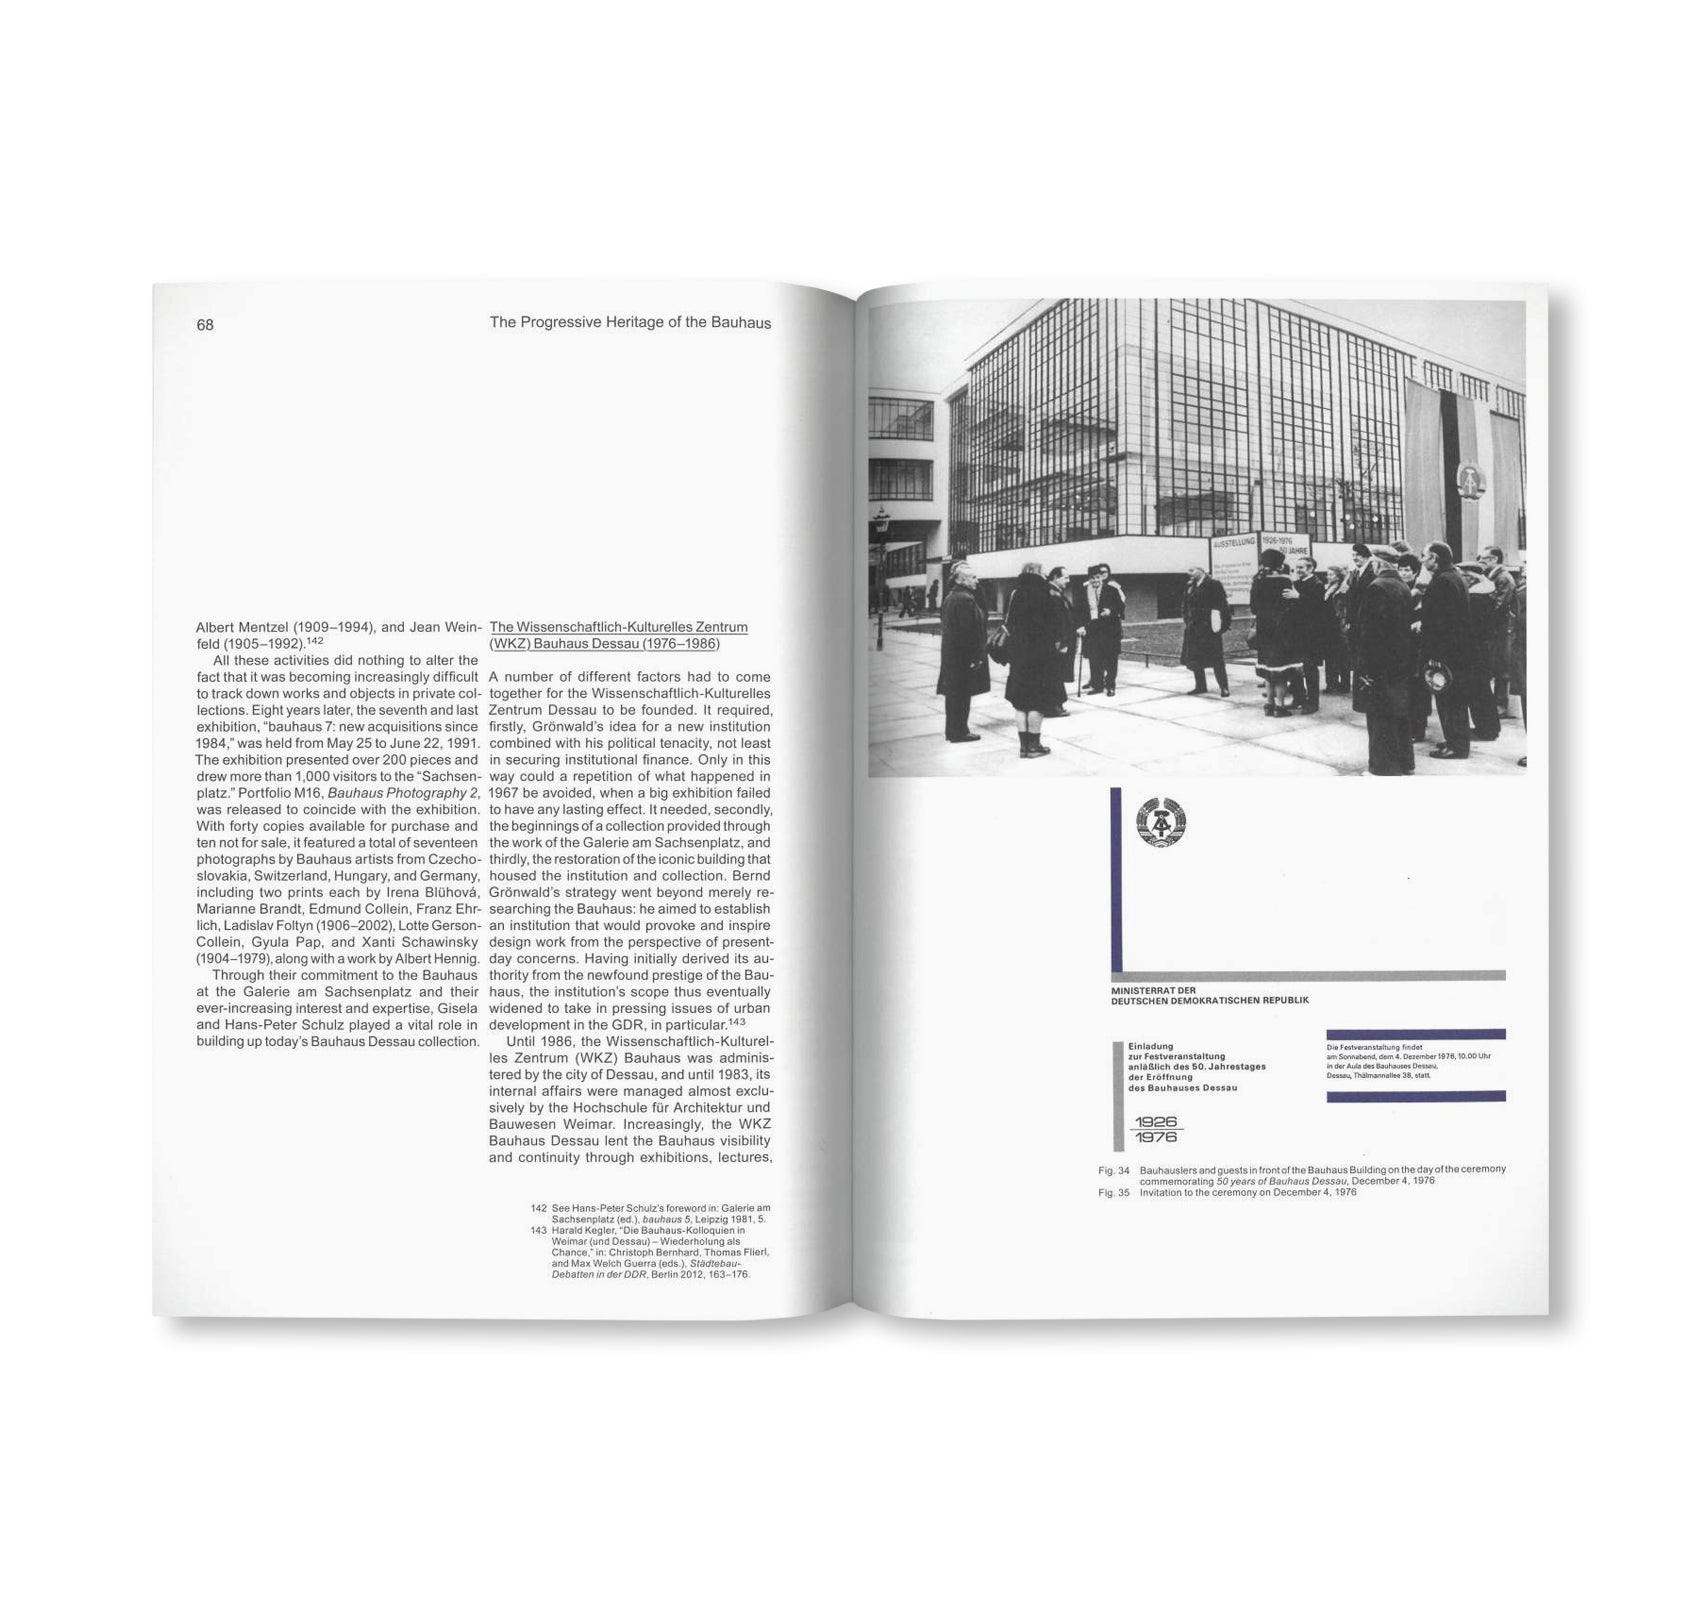 THE PROGRESSIVE HERITAGE OF THE BAUHAUS - ON THE ORIGINS OF AN EAST GERMAN BAUHAUS COLLECTION / Edition Bauhaus 54 by Stiftung Bauhaus Dessau